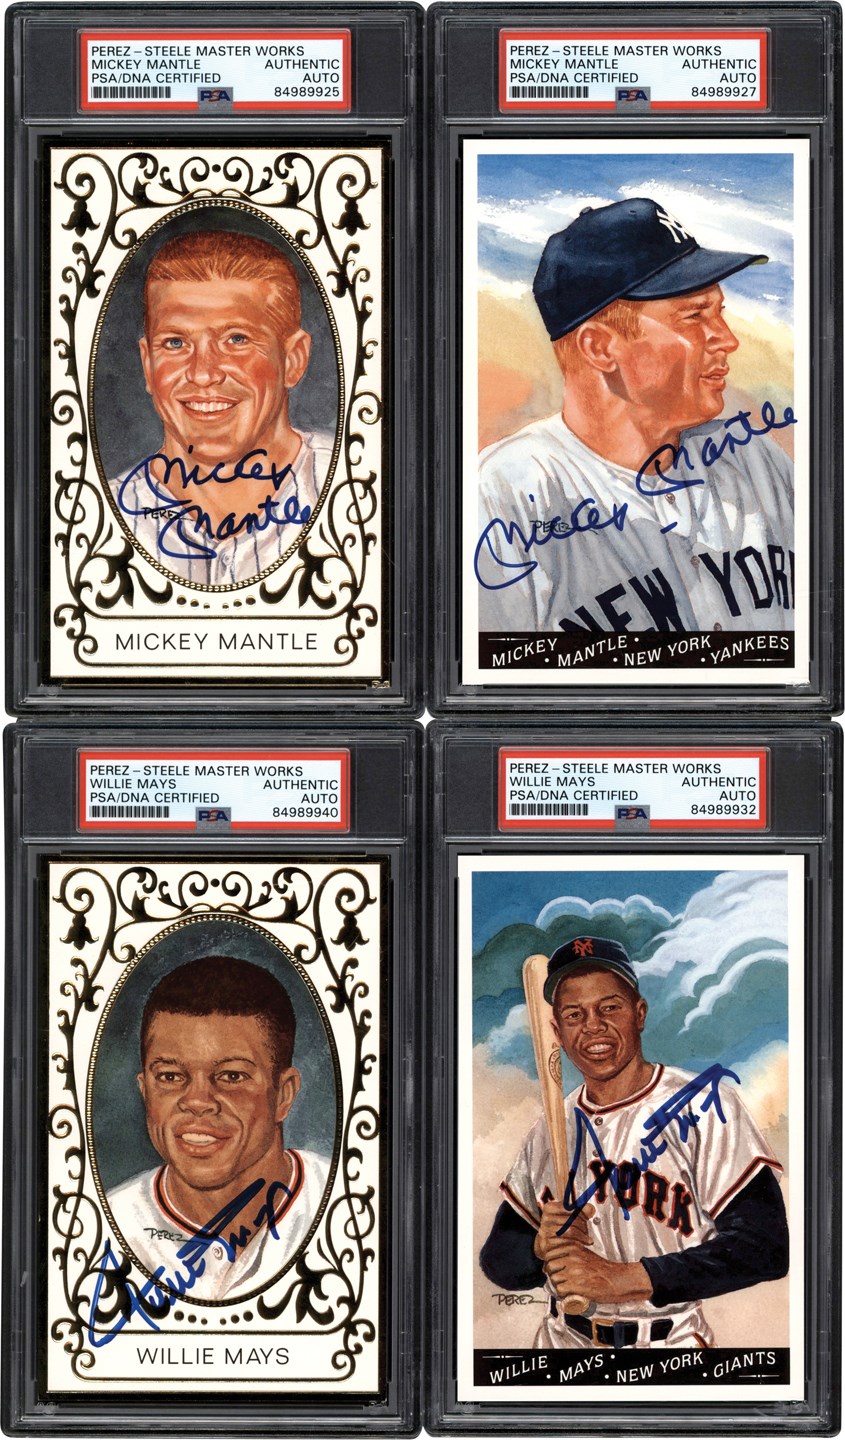 Baseball Autographs - Perez-Steele Hall of Fame Master Works Series I Signed Postcard Complete Set w/Mantle & Mays PSA